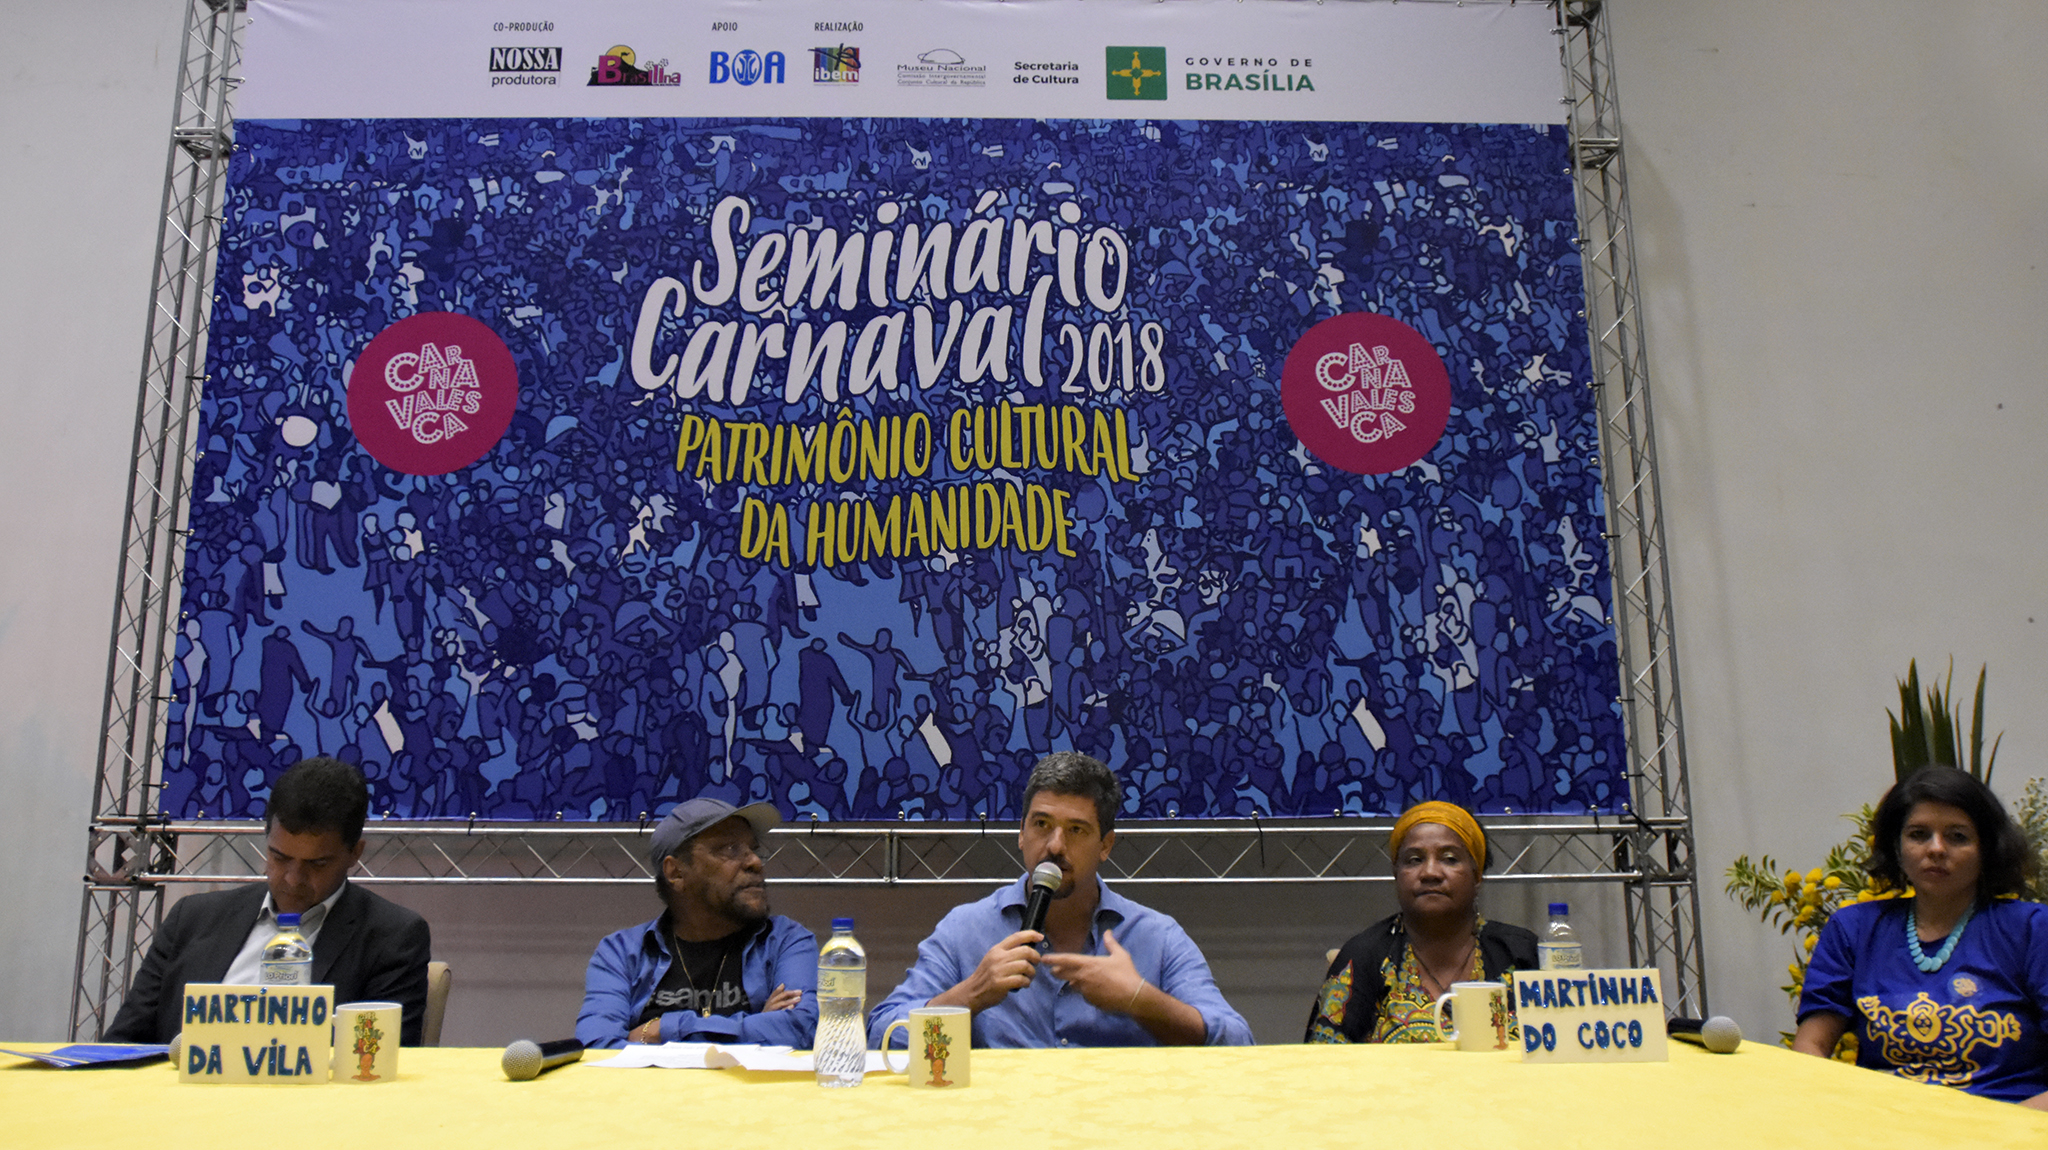 Veja o debate ocorrido no Seminário carnavalesca 2018 (video)